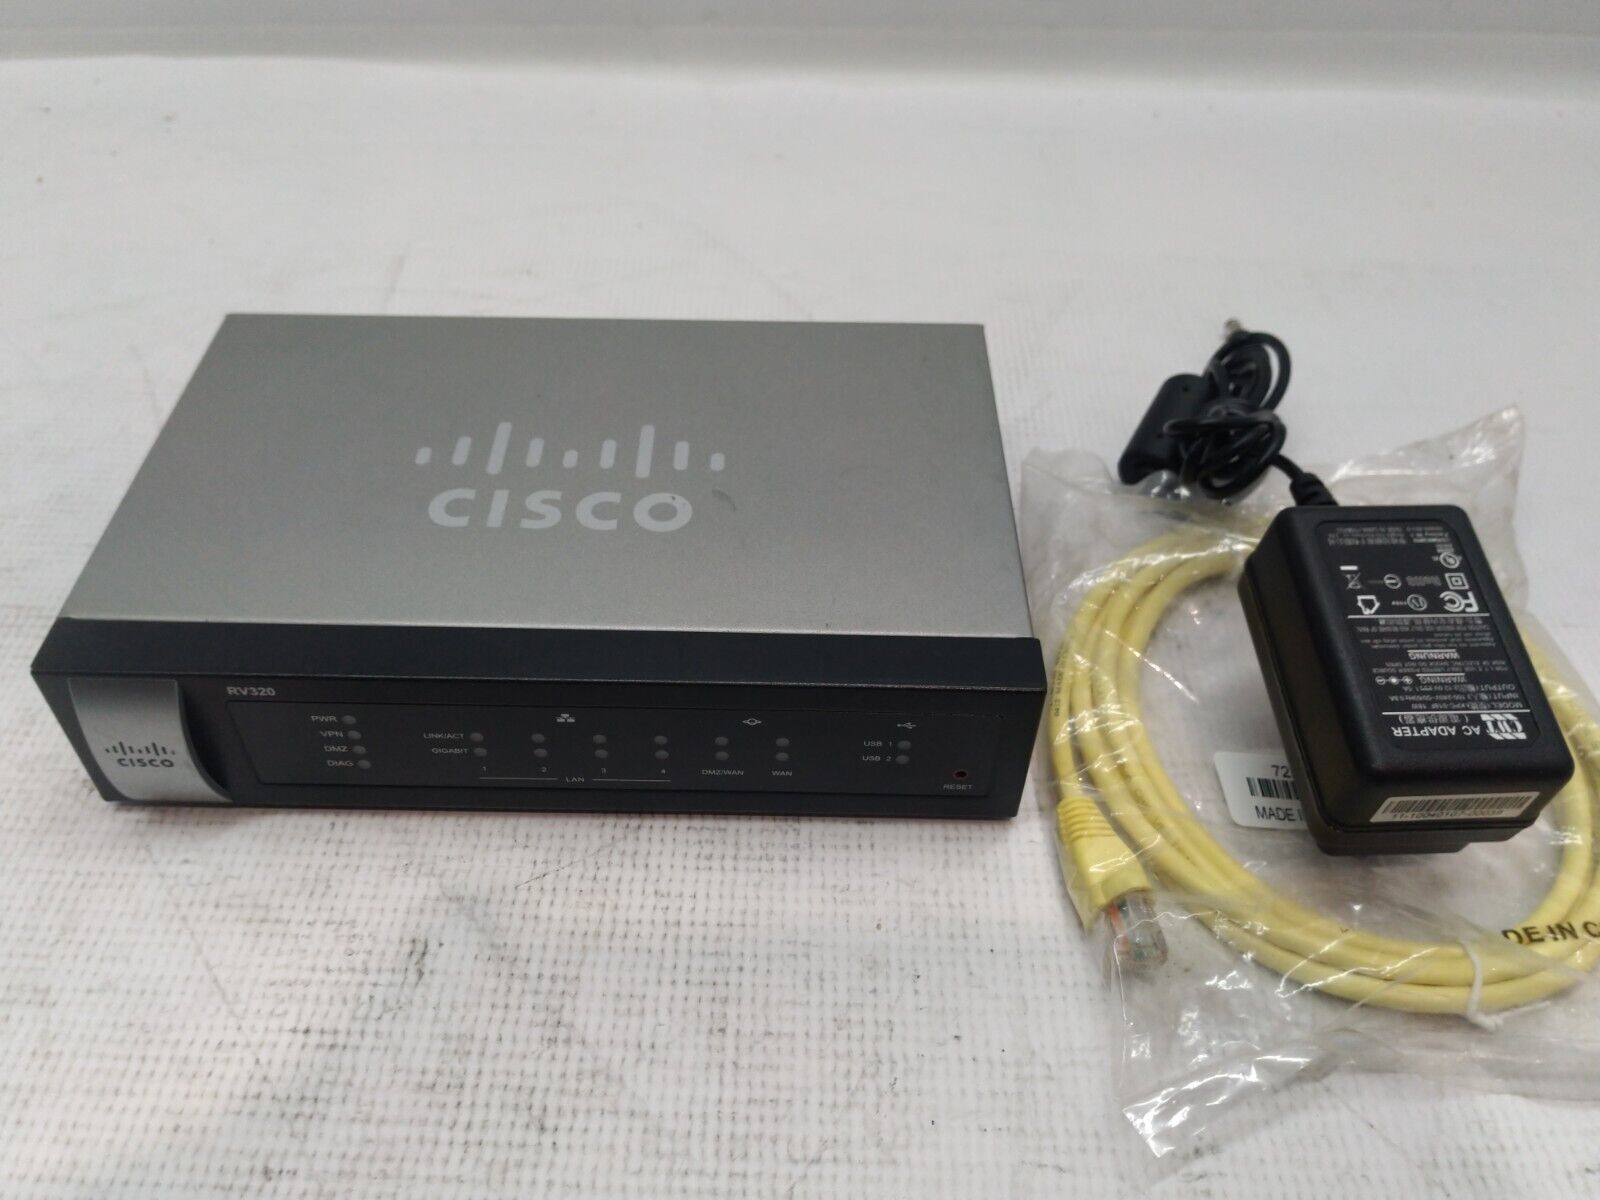 Cisco RV320 Dual Gigabit WAN VPN Router with AC